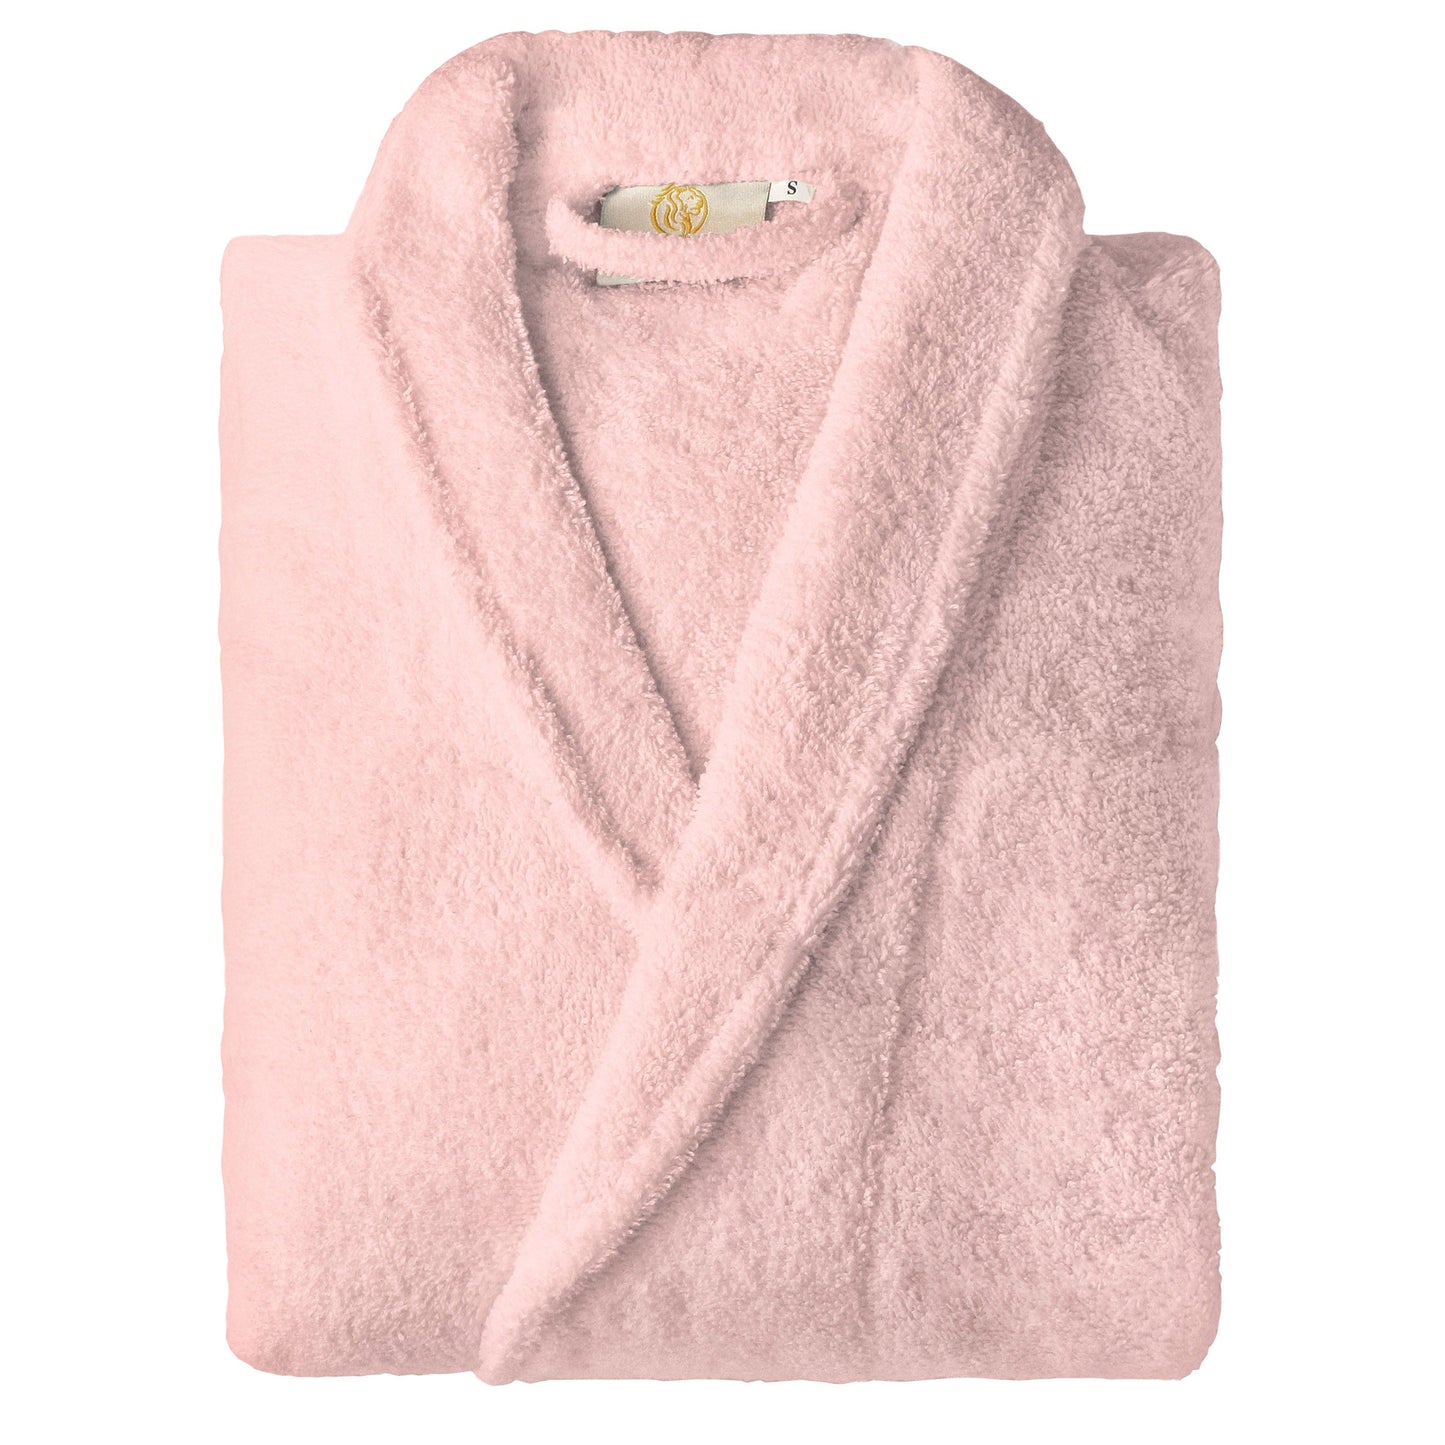 100% Premium Long-Staple Cotton Unisex Terry Bath Robe, 10 Colors FredCo